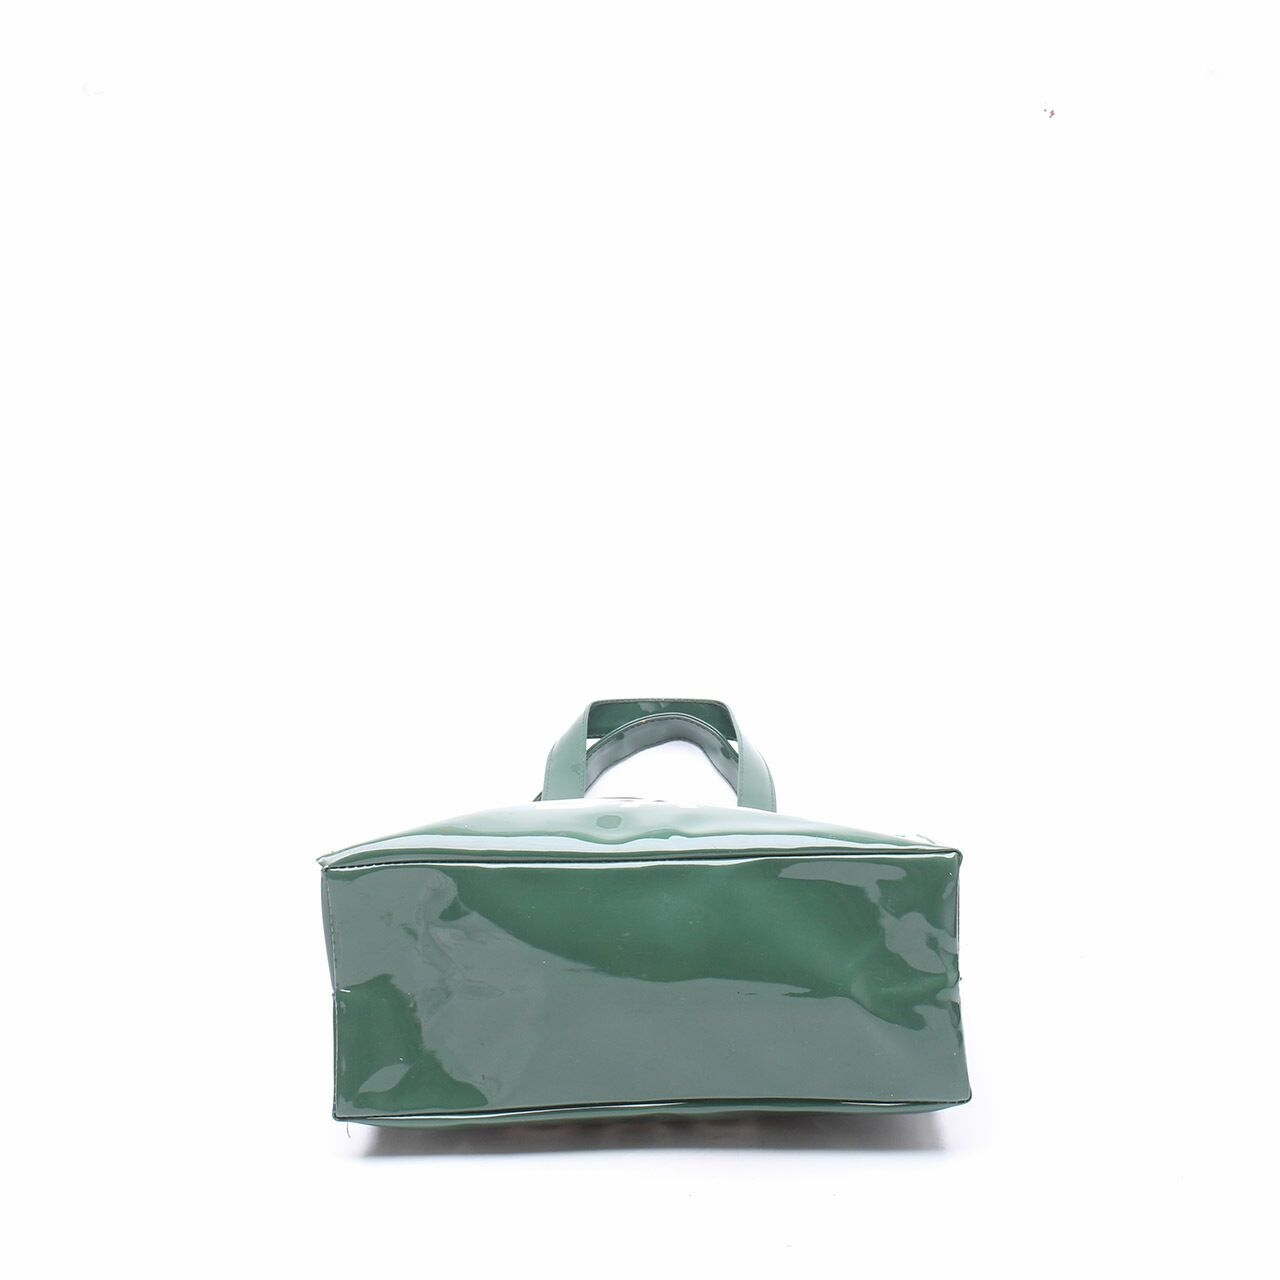 Harrods Green Tote Bag